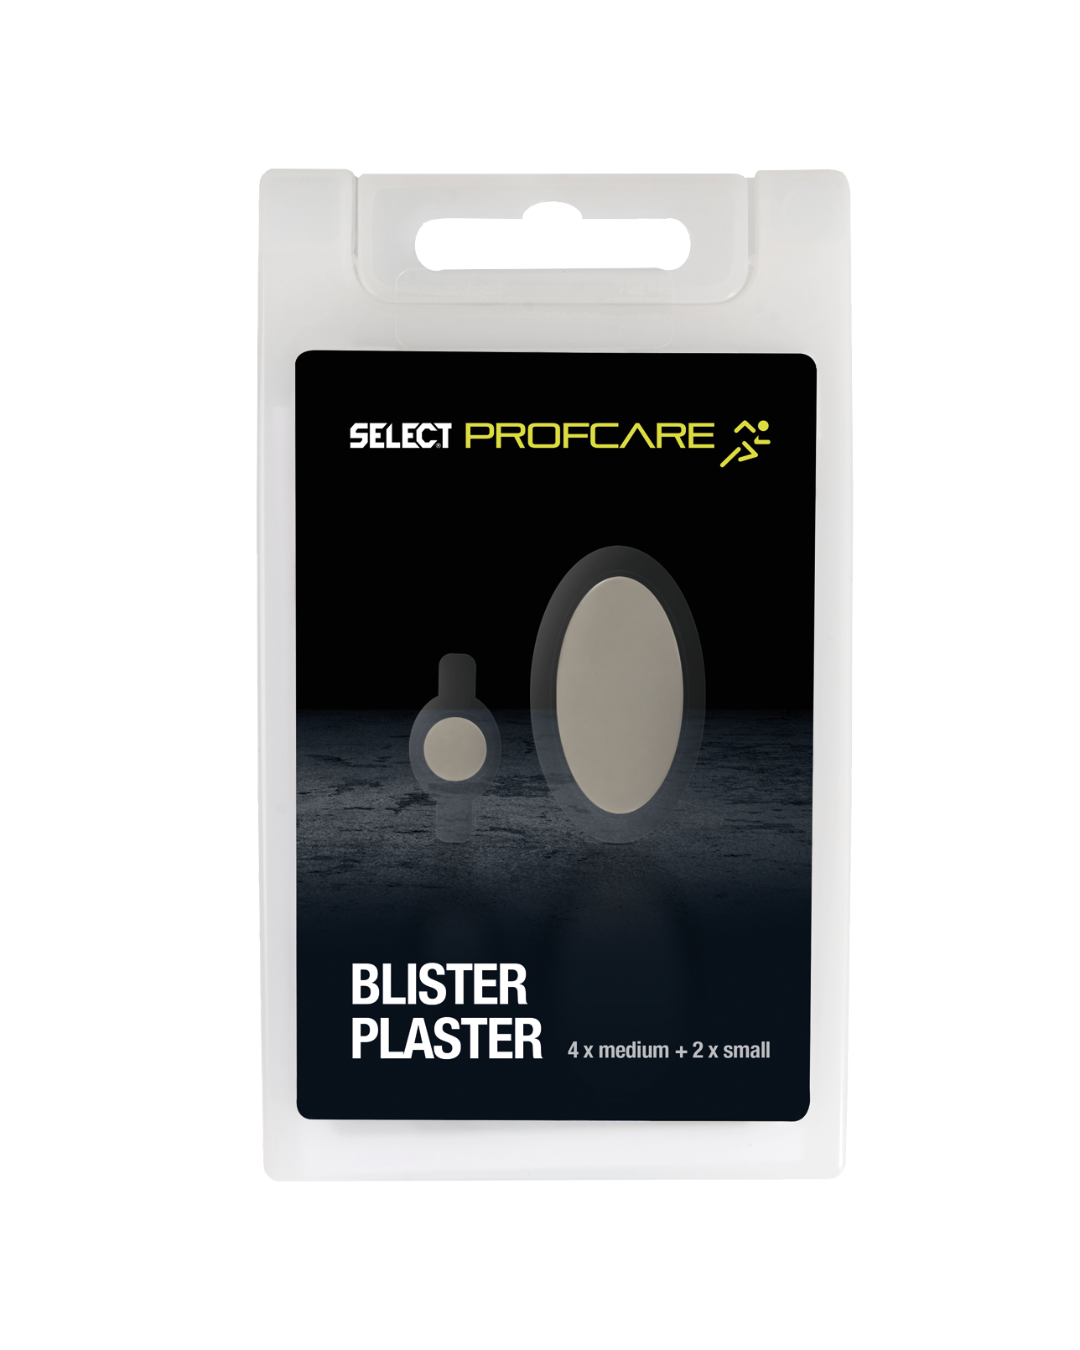 Select Procare Blister Plaster